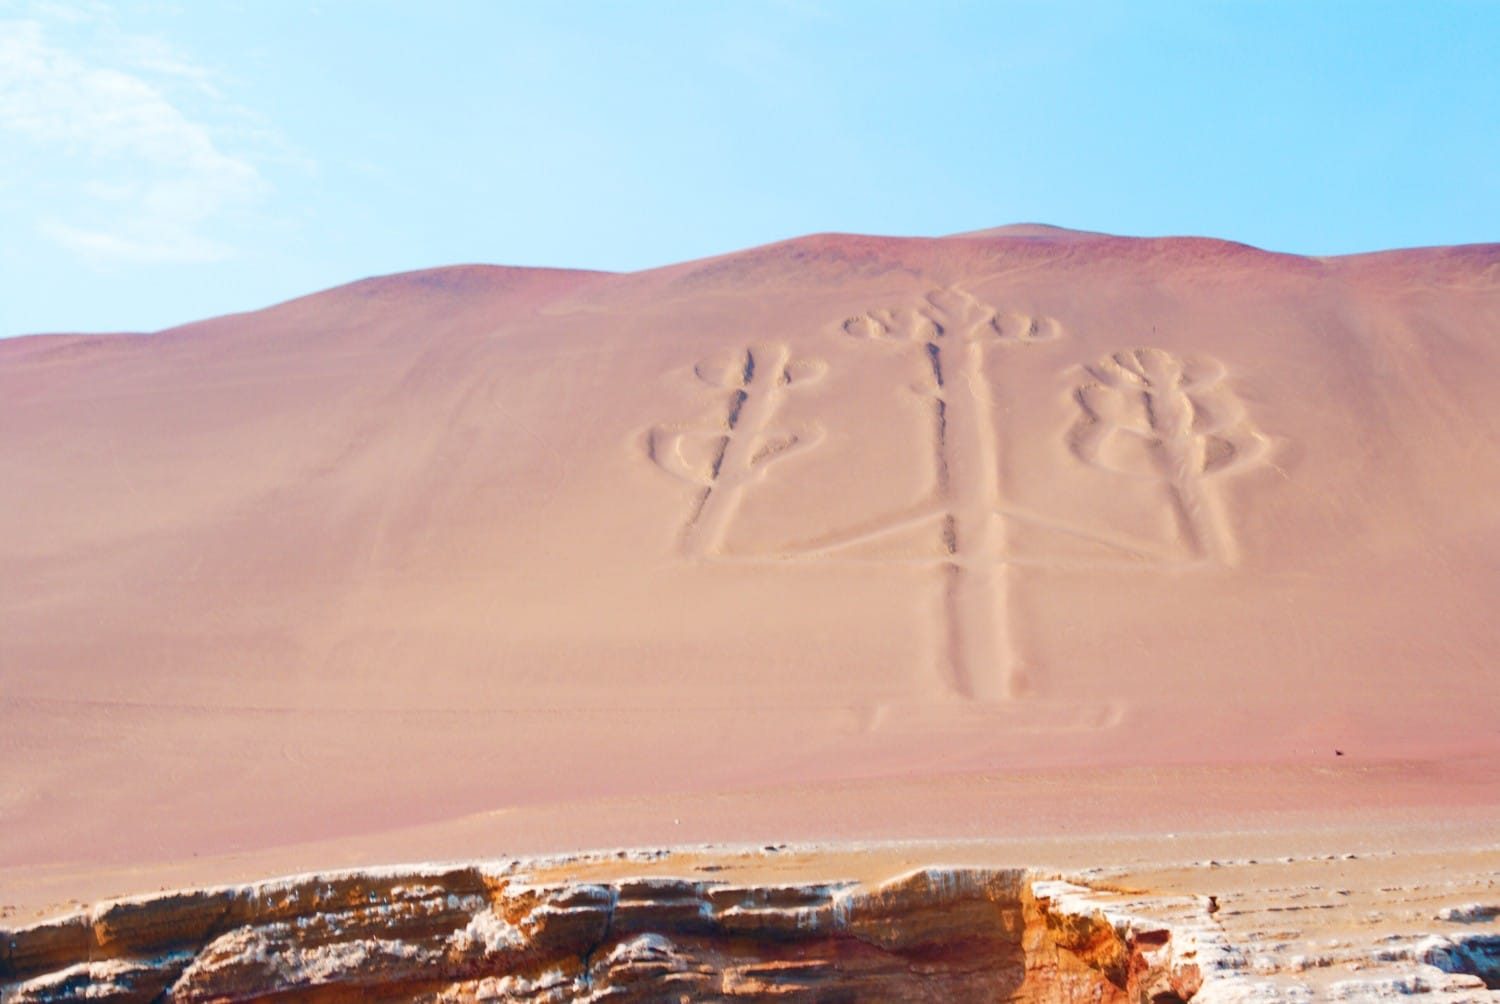 Candelabra Geoglyph, Peru on our trip to the Ballestas Islands